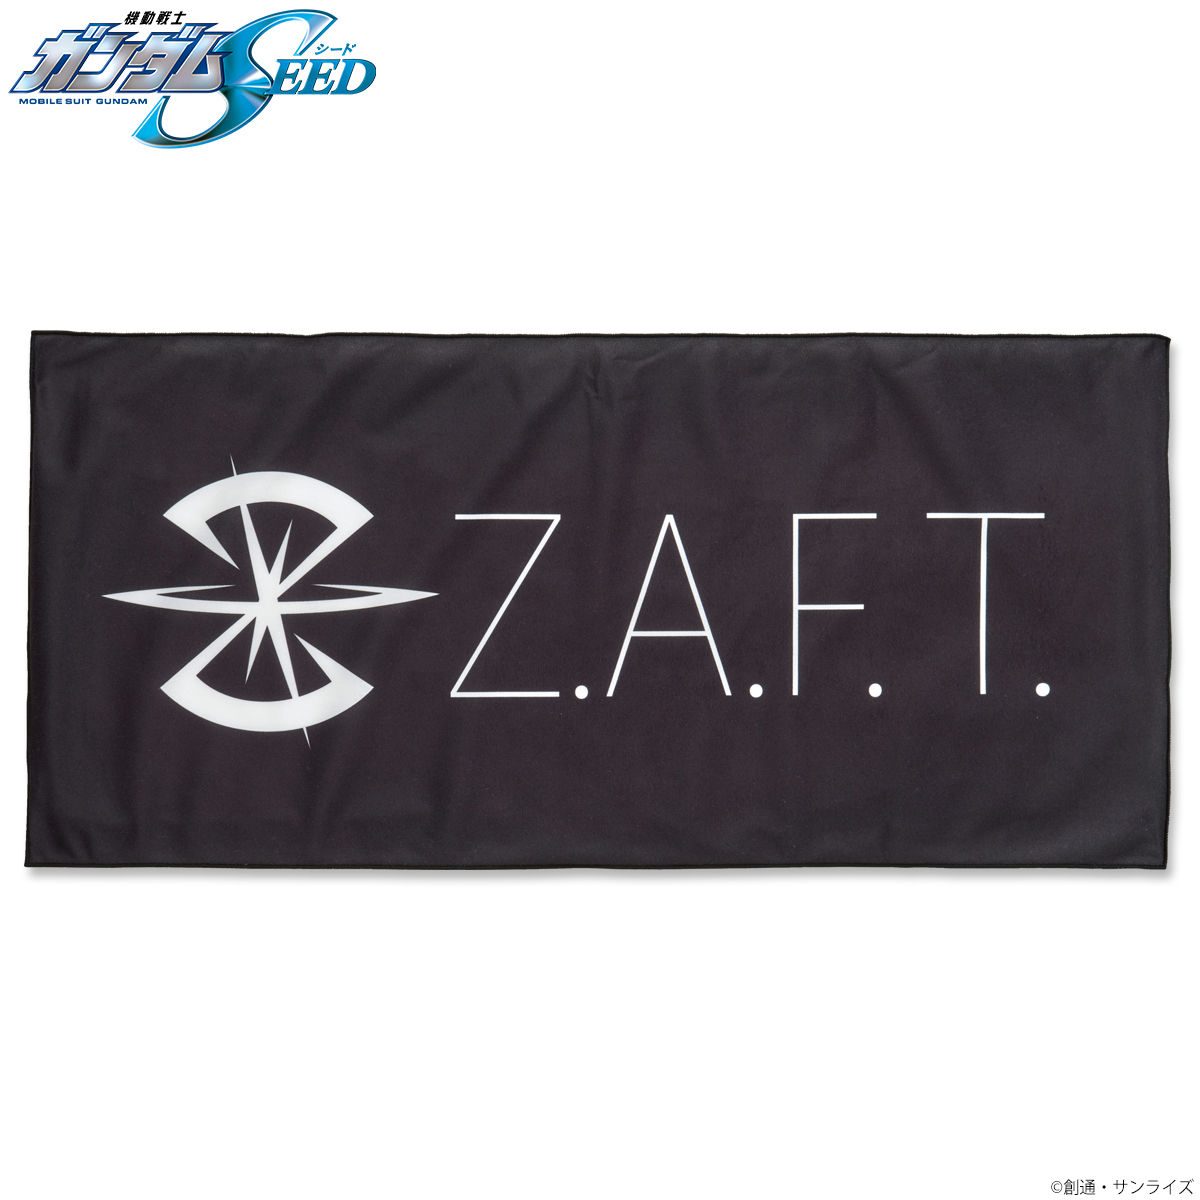 Mobile Suit Gundam SEED ZAFT Emblem Face Towel